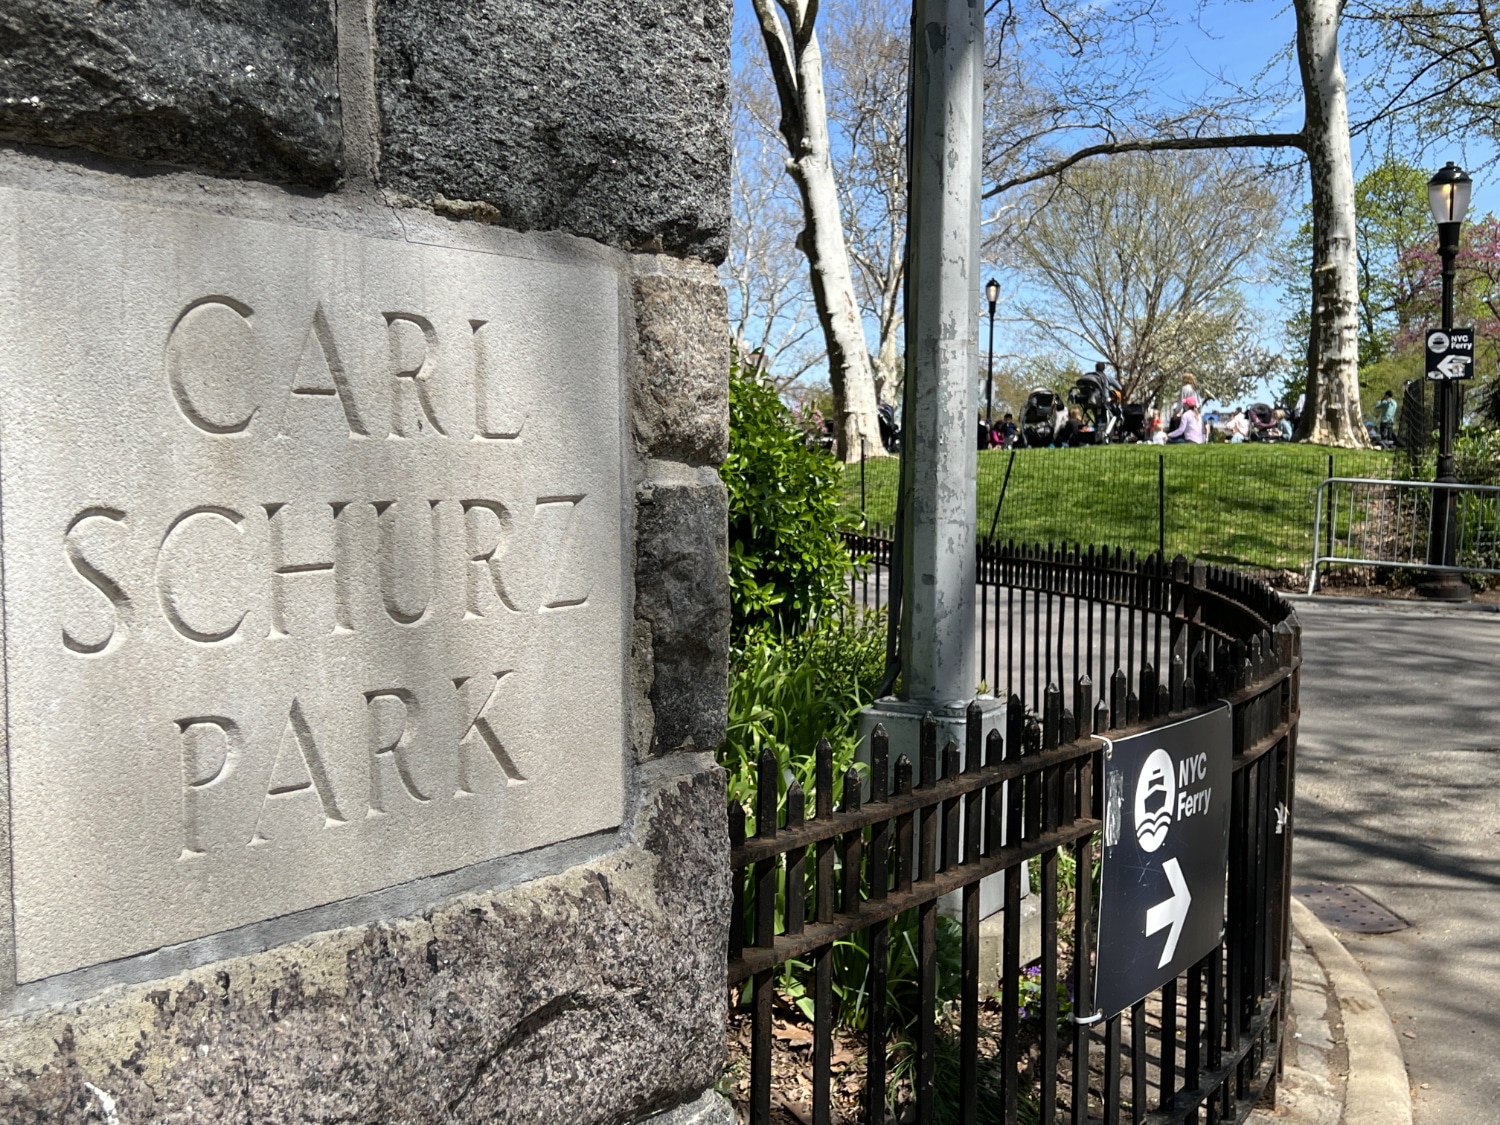 Carl Schurz Park on East End Avenue/Upper East Site